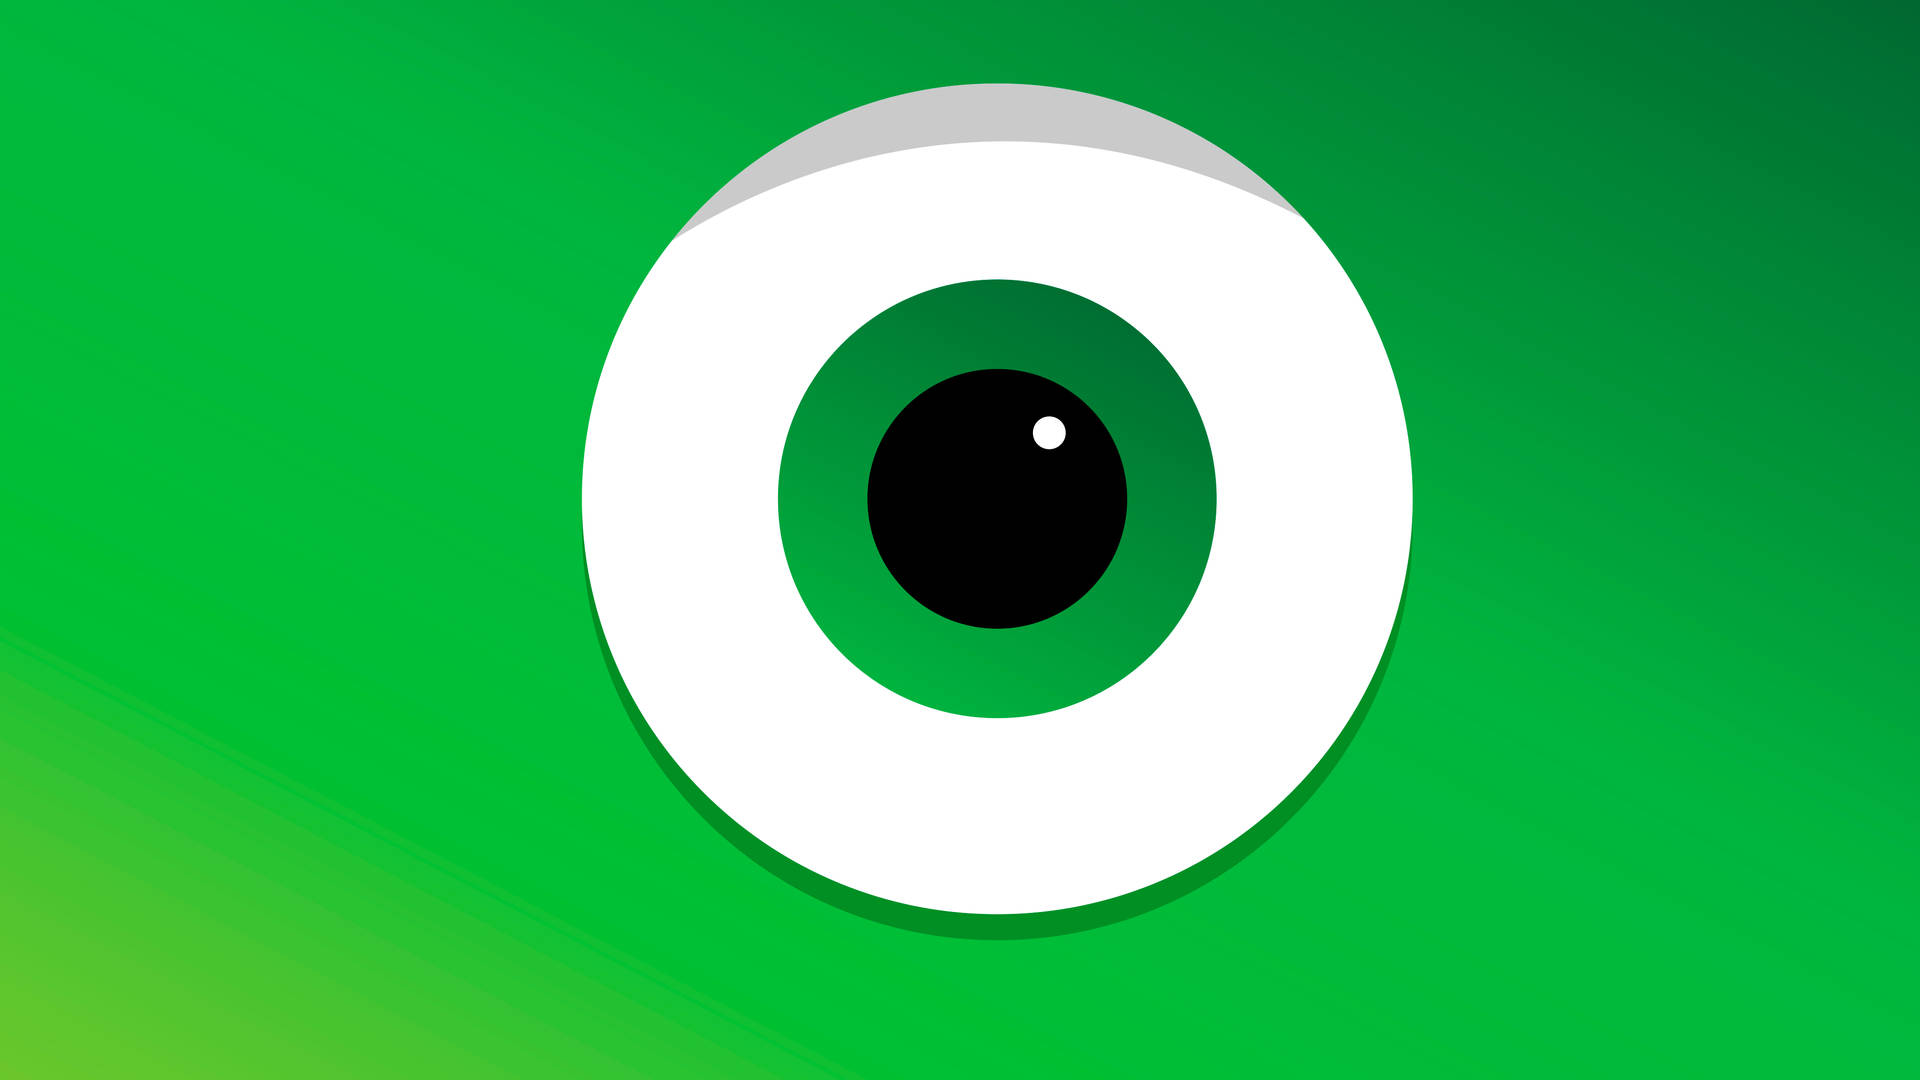 Mike Wazowski Iconic Green Eyes